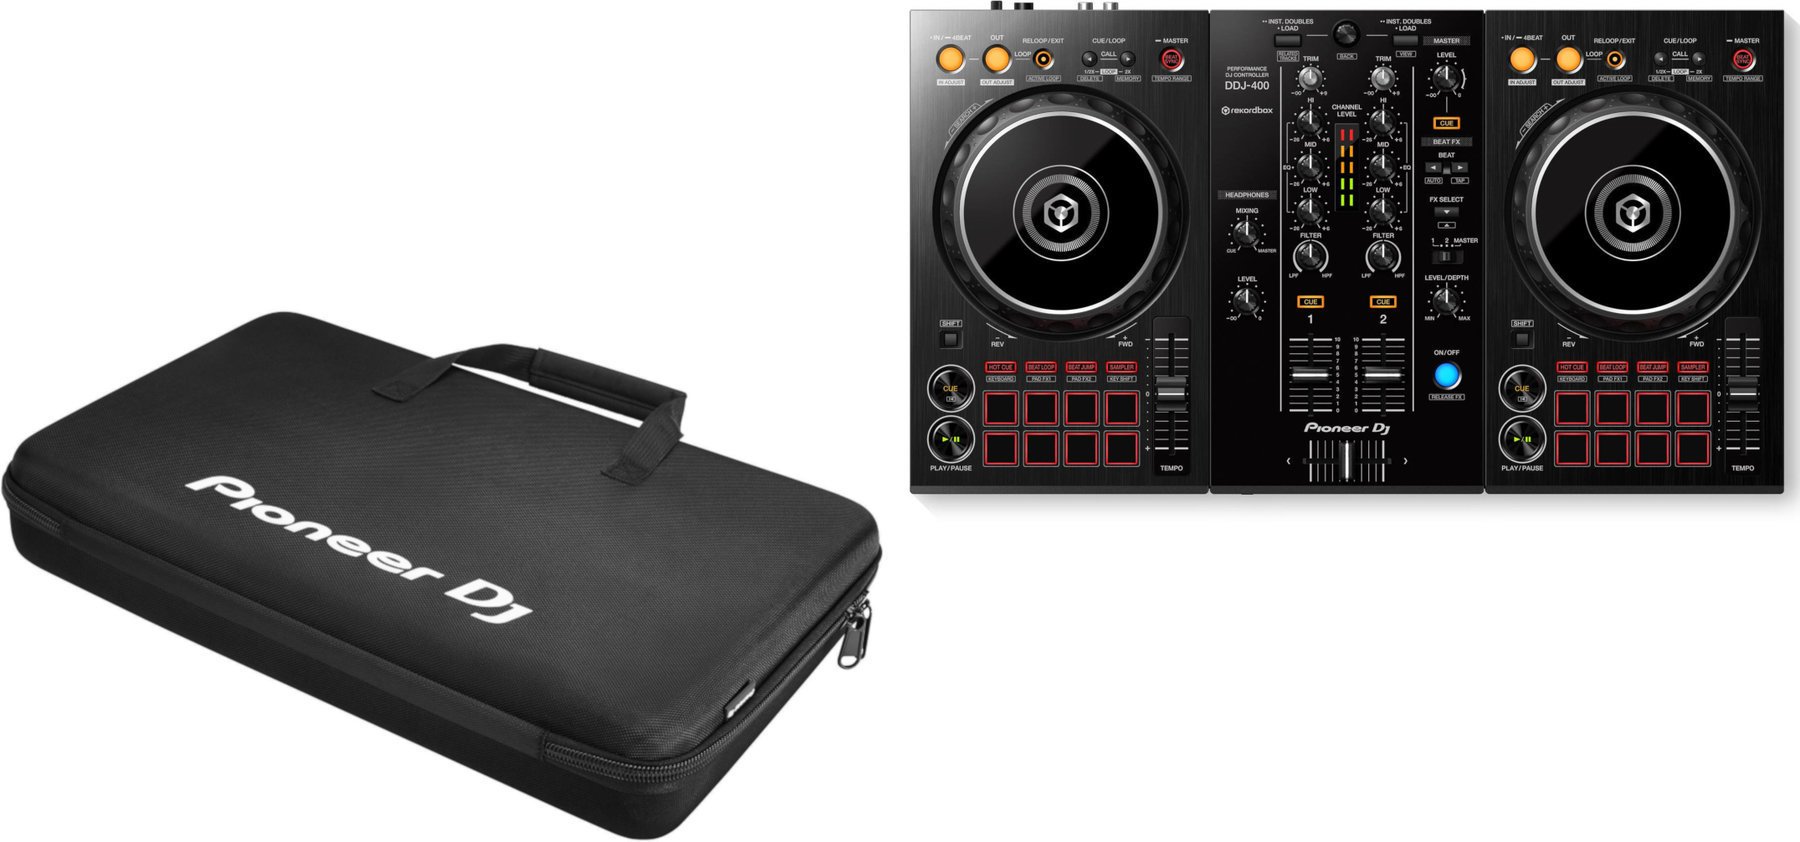 Contrôleur DJ Pioneer Dj DDJ-400-DJC-B SET Contrôleur DJ